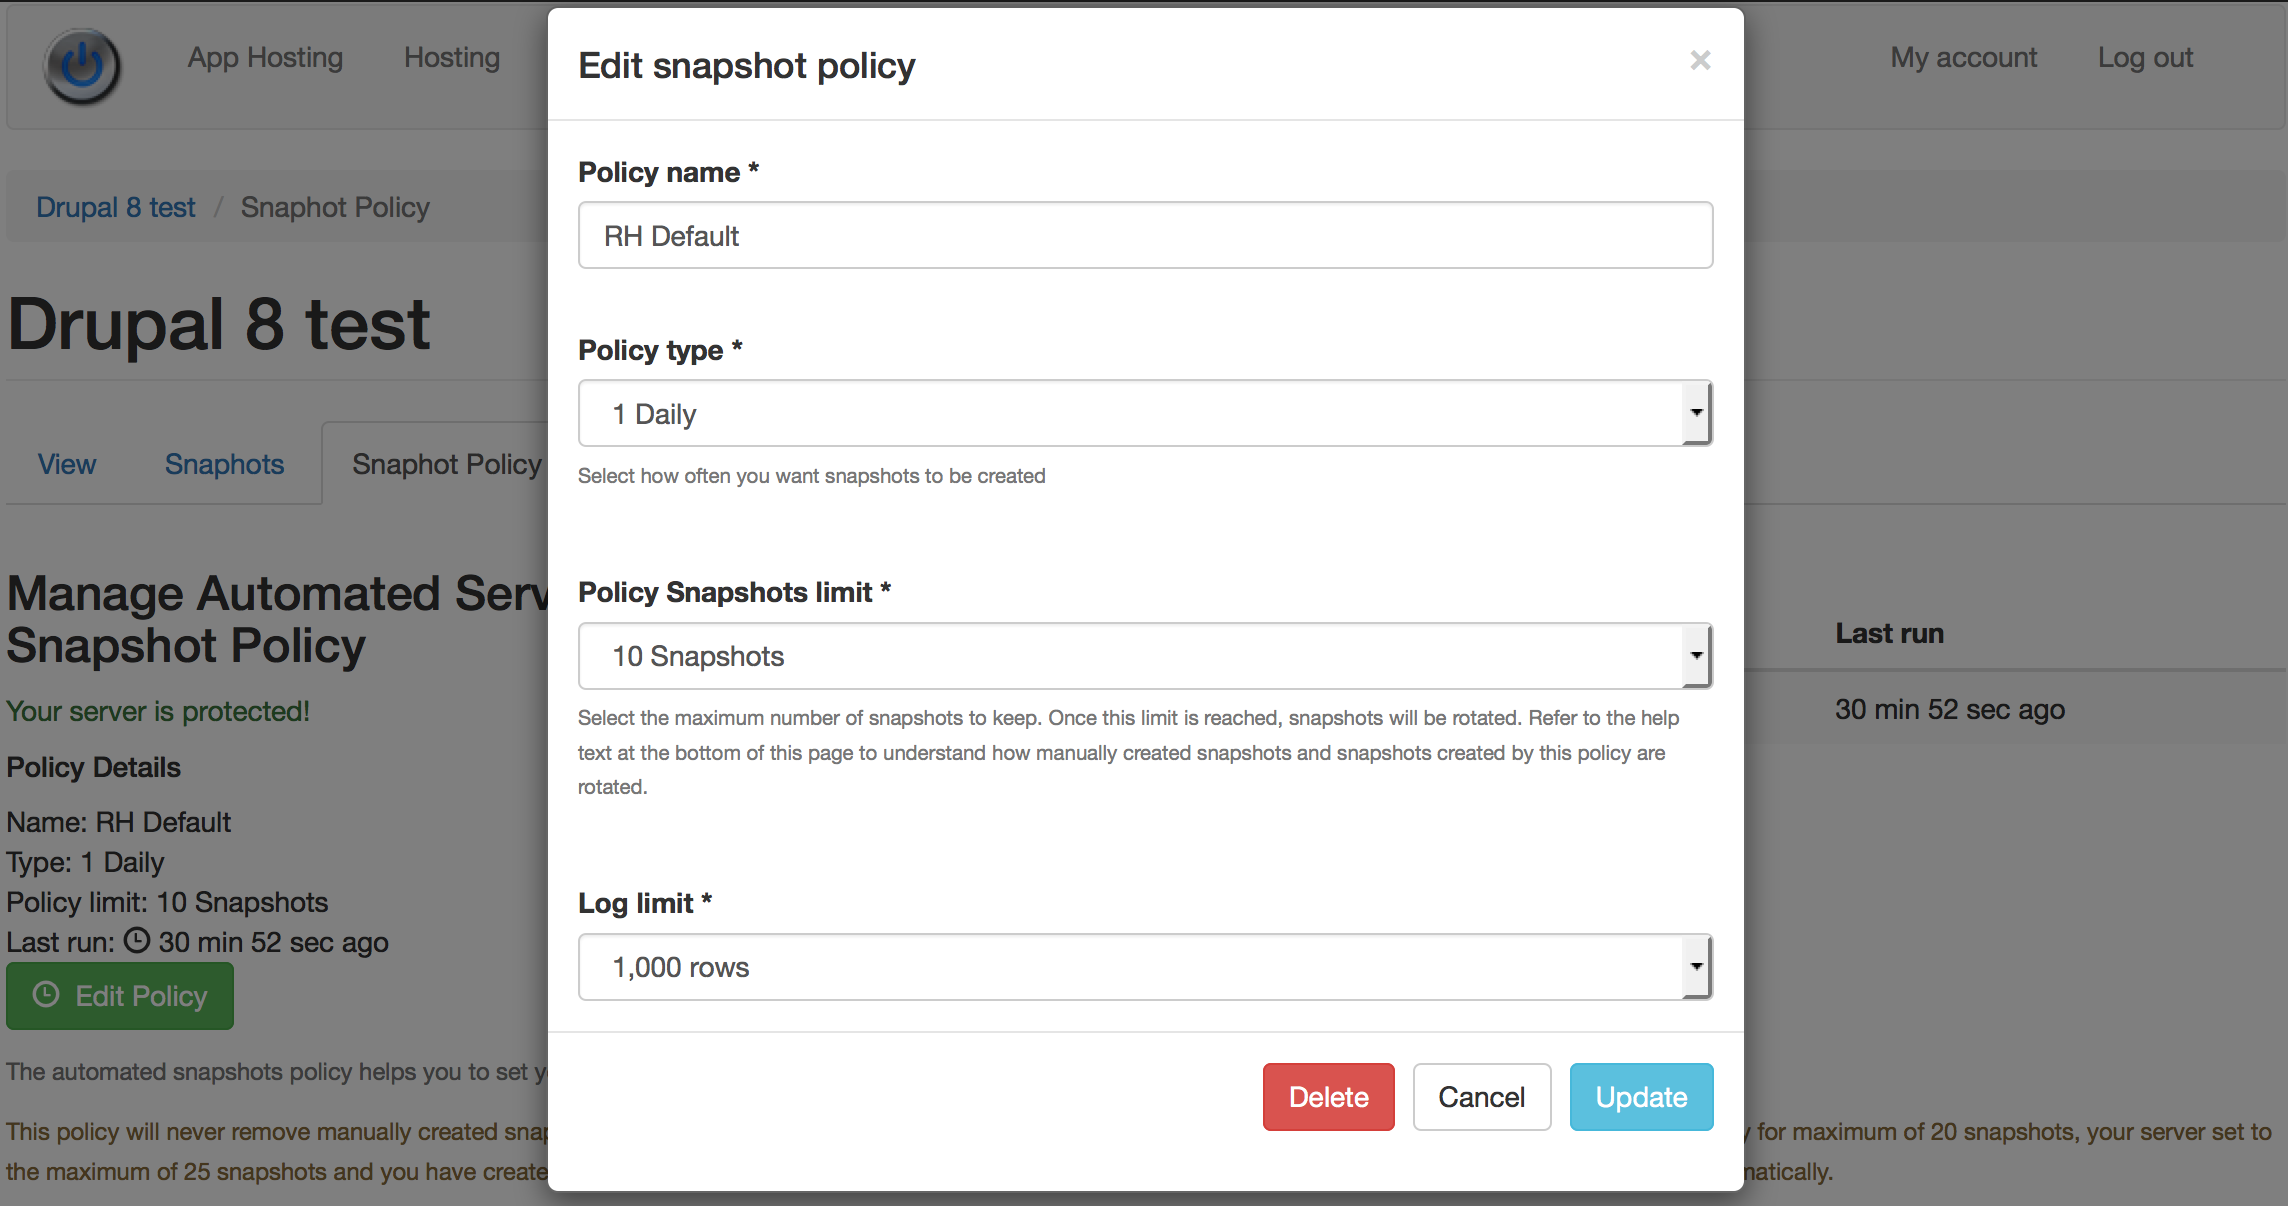 Screenshot: Edit snapshot policy form